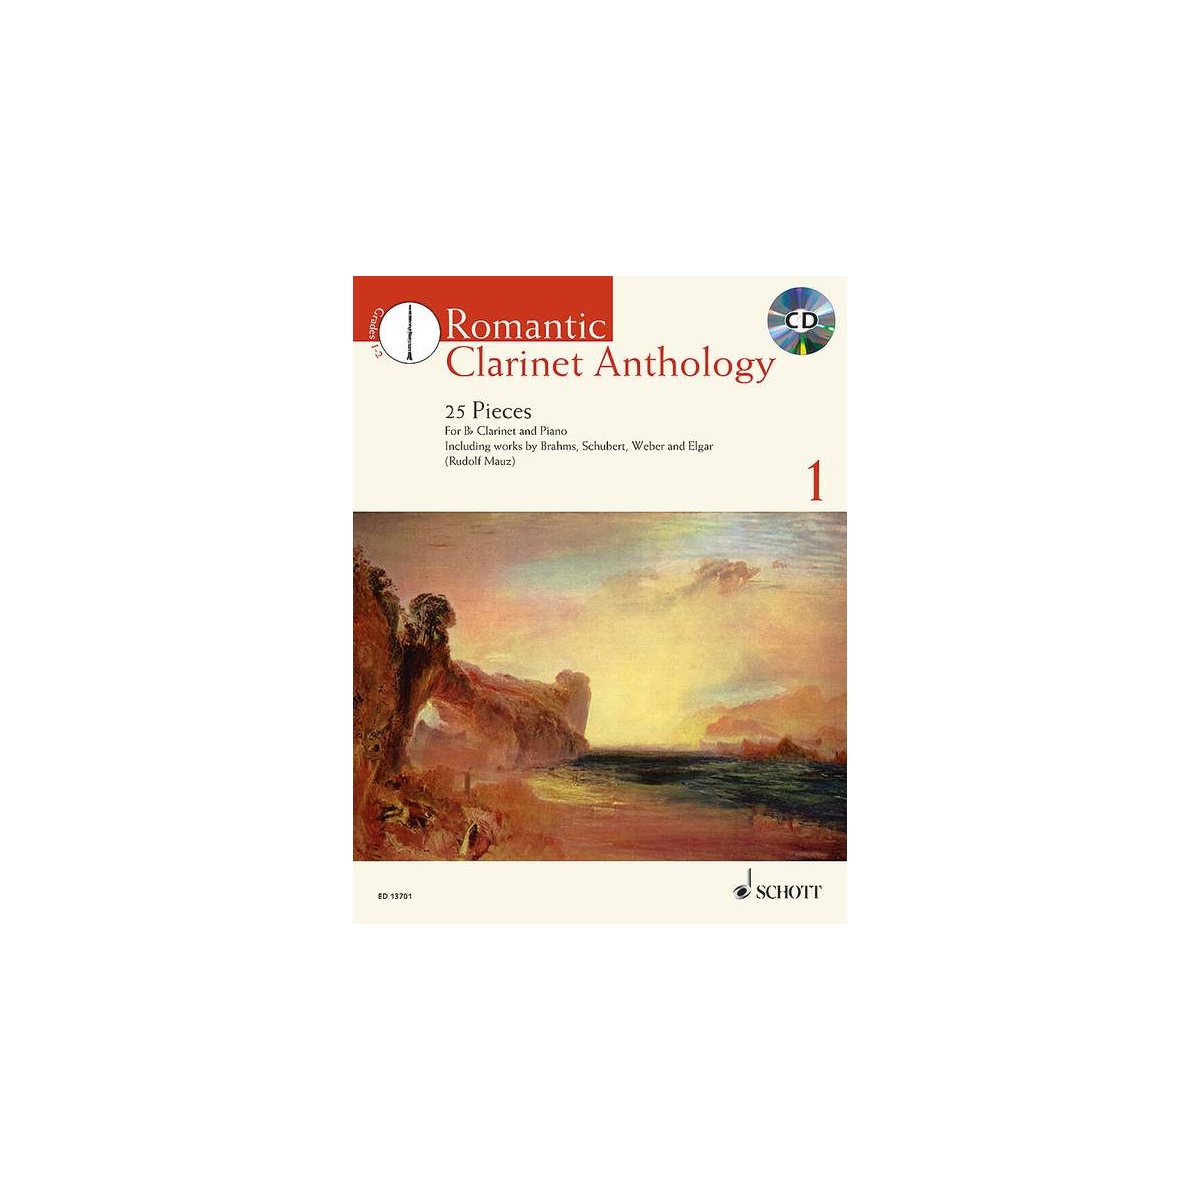 Romantic Clarinet Anthology: 25 Pieces